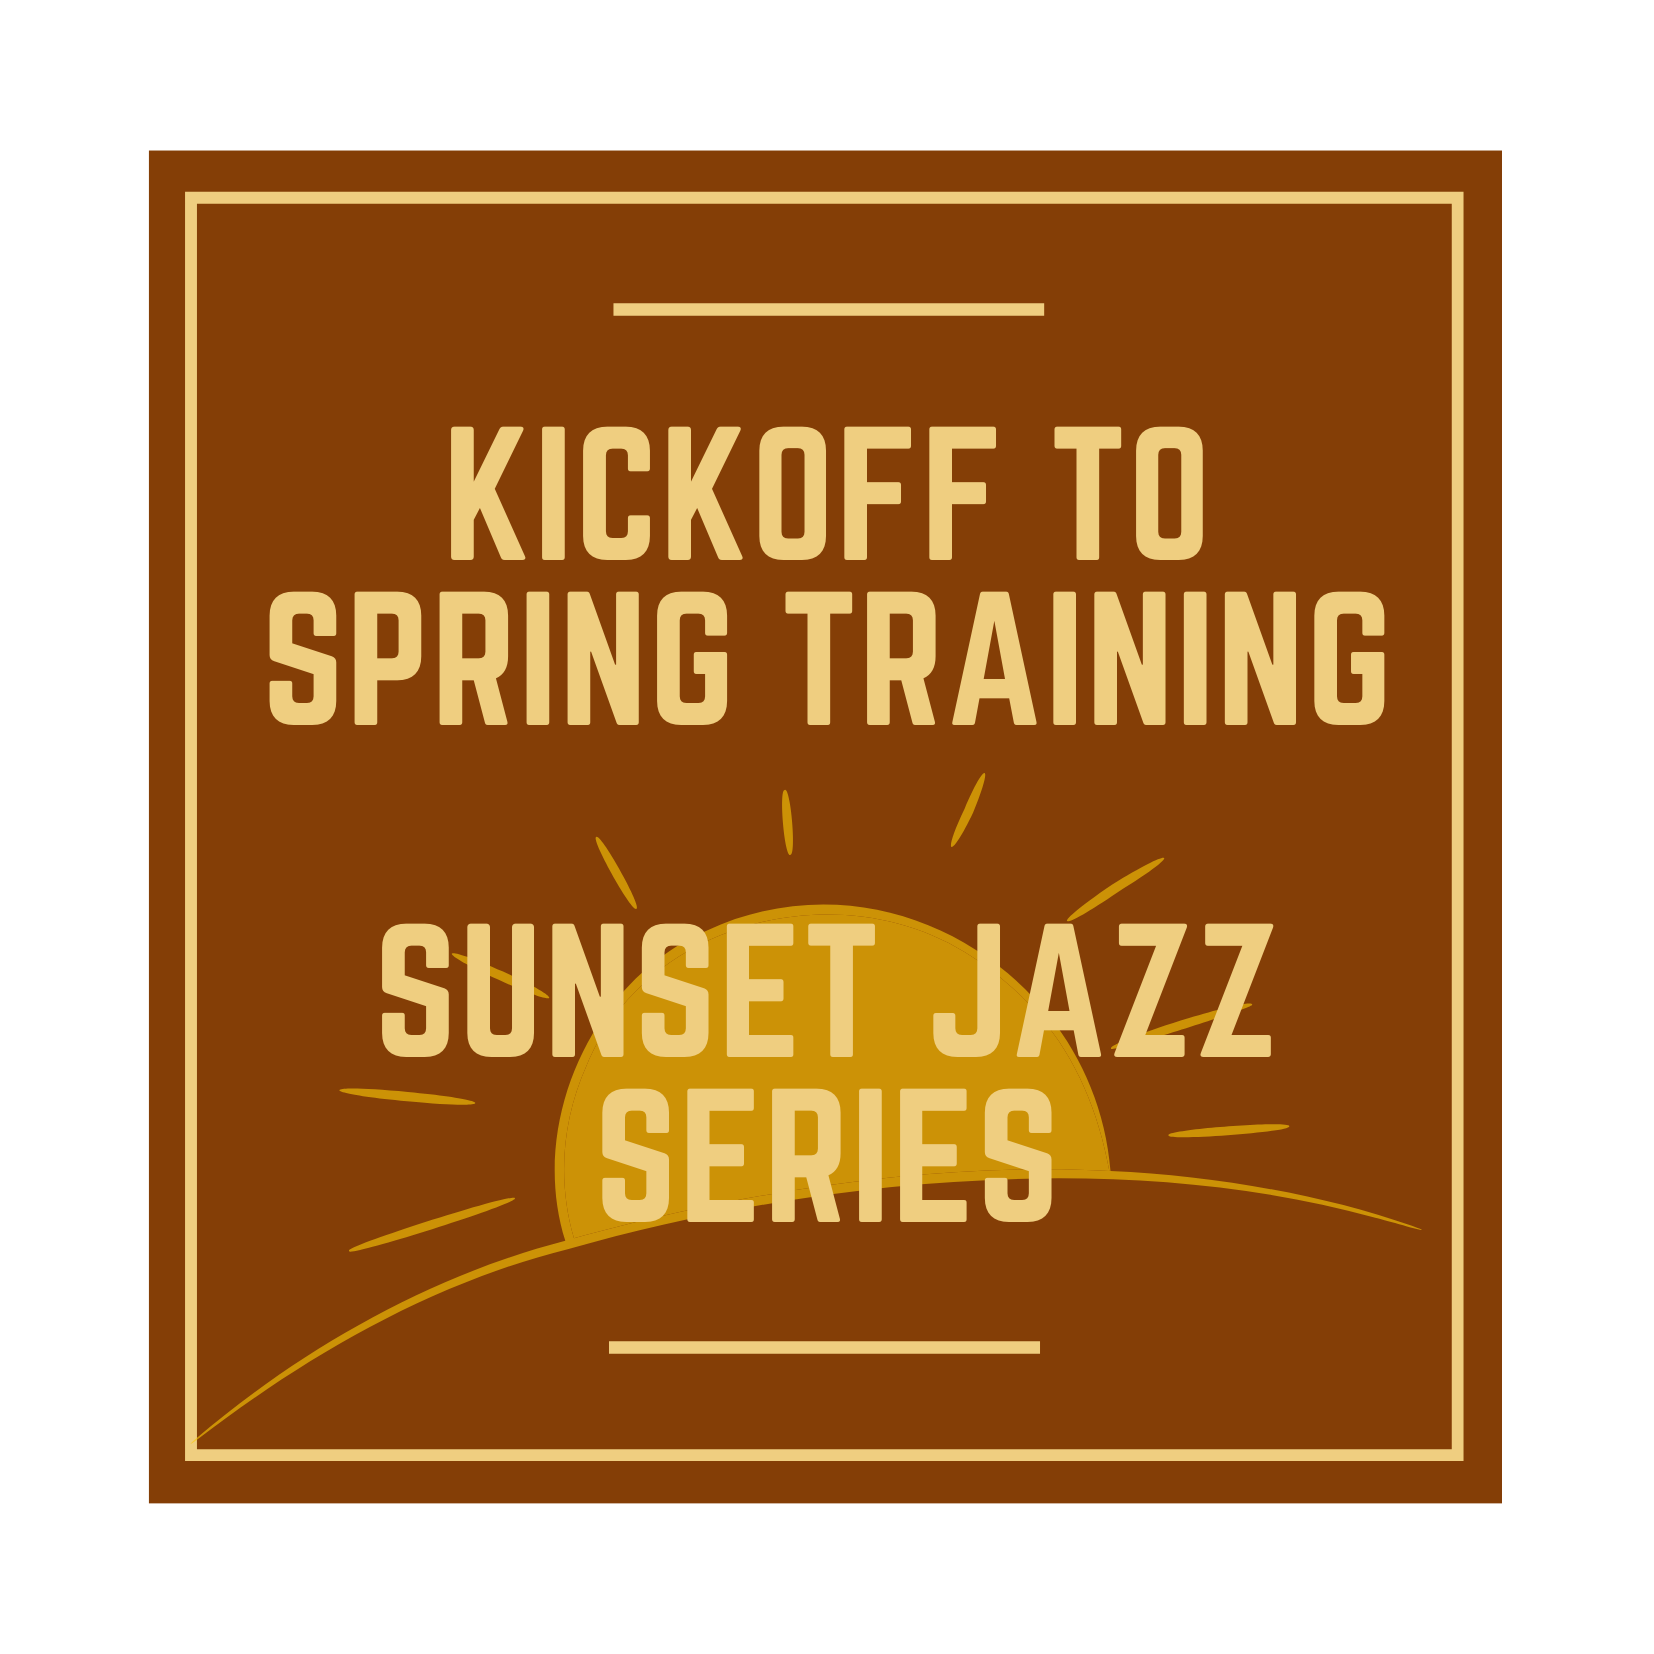 Sunset Music Series - Kick off to Spring Training